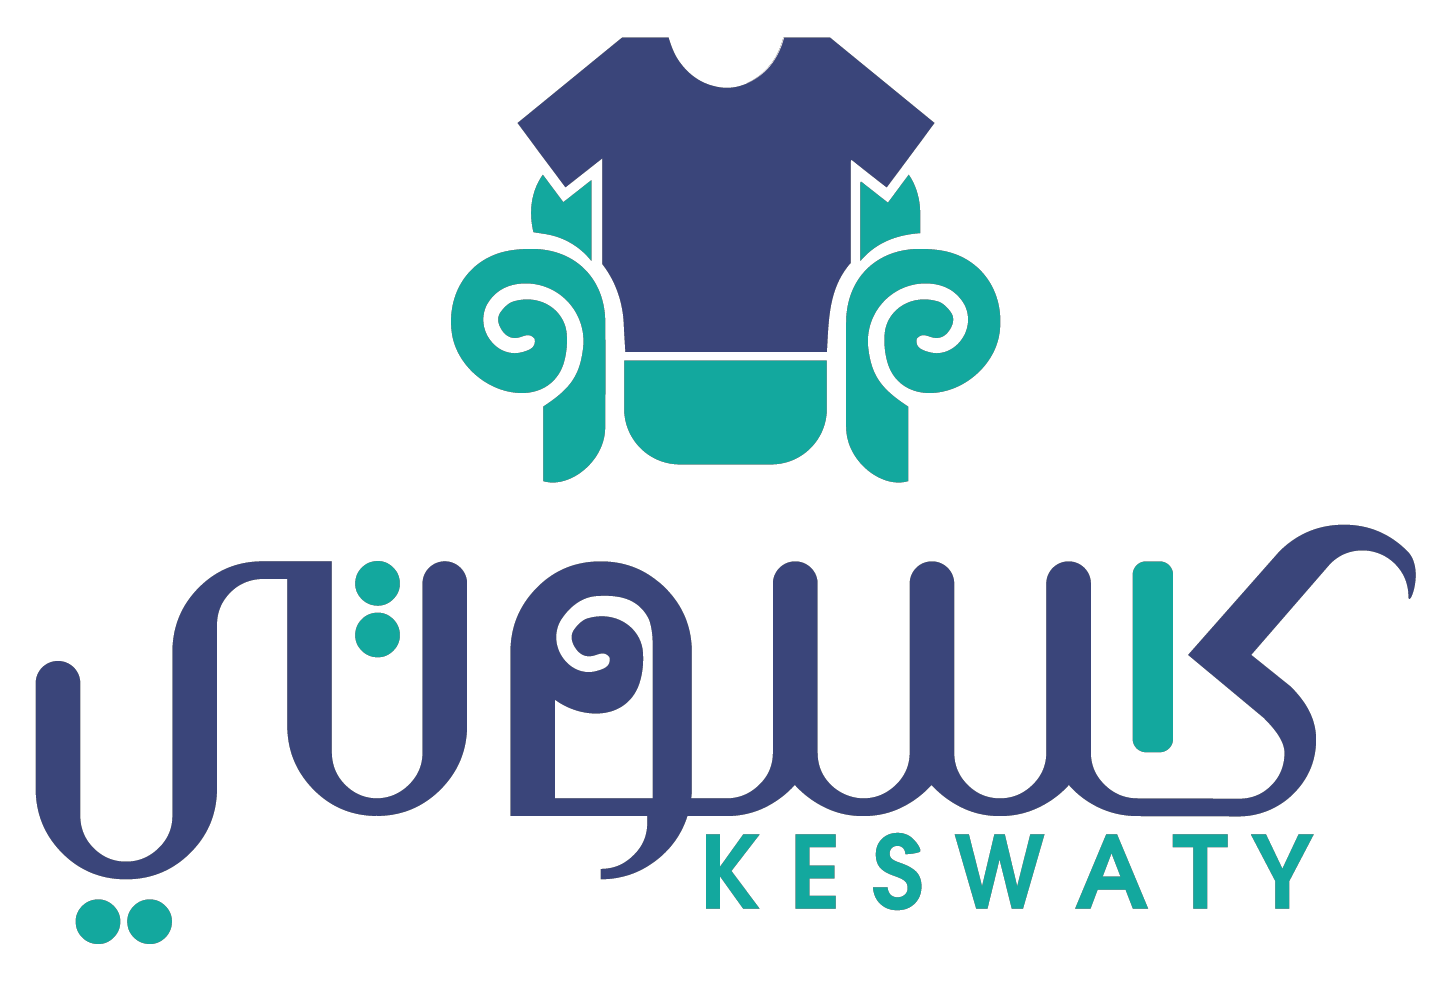 Keswaty